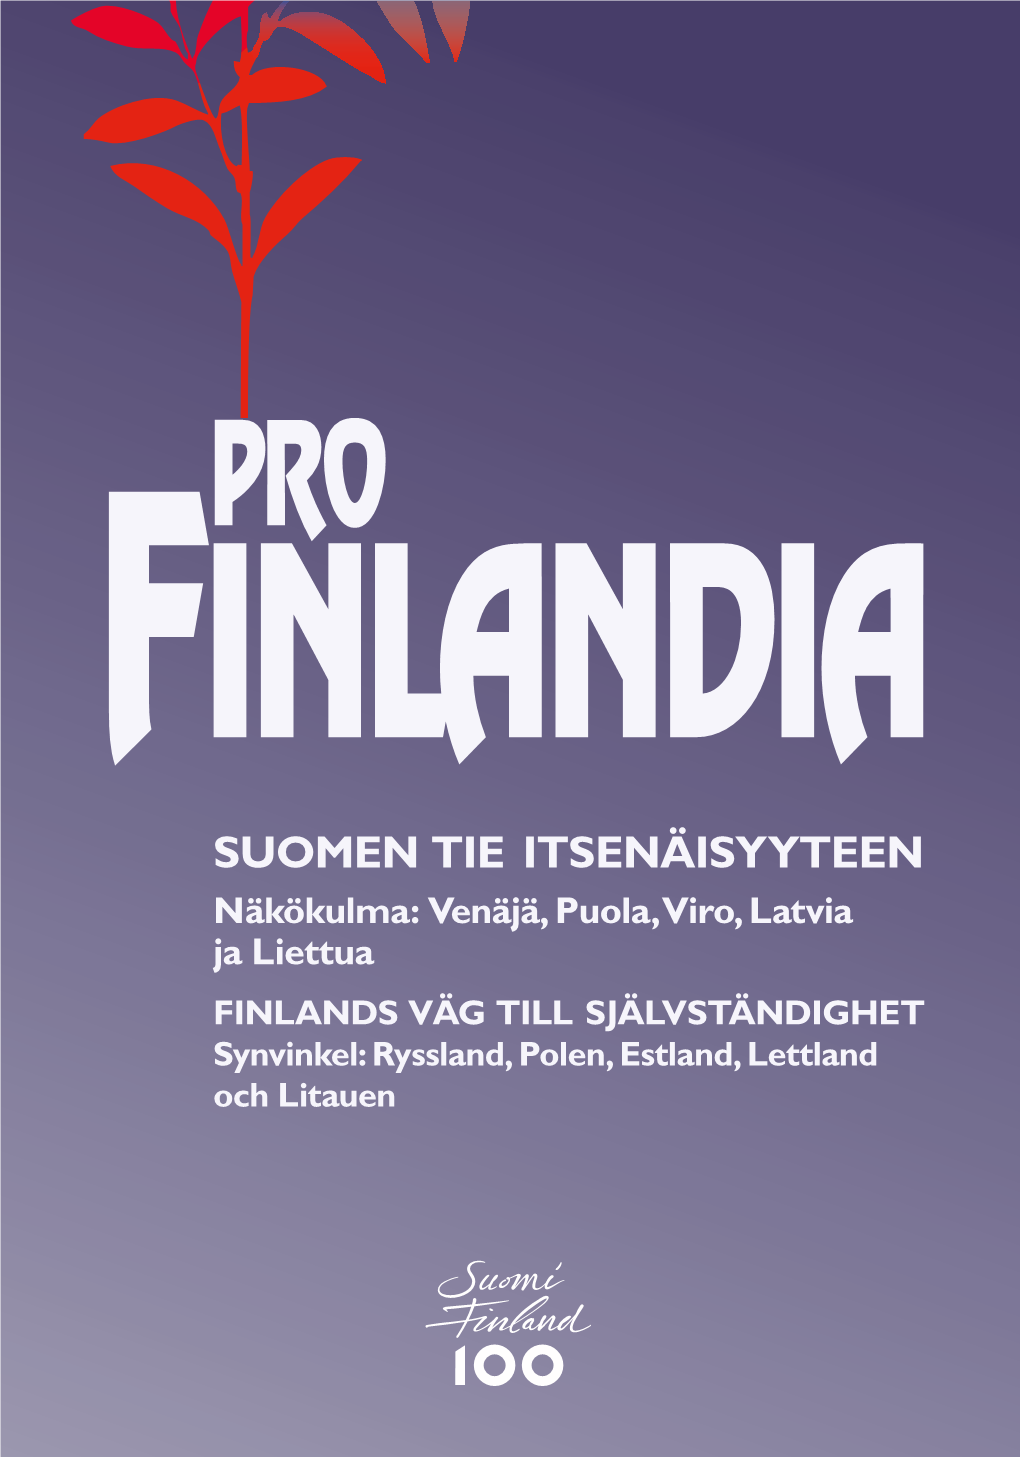 Pro Finlandia IV (Pdf)